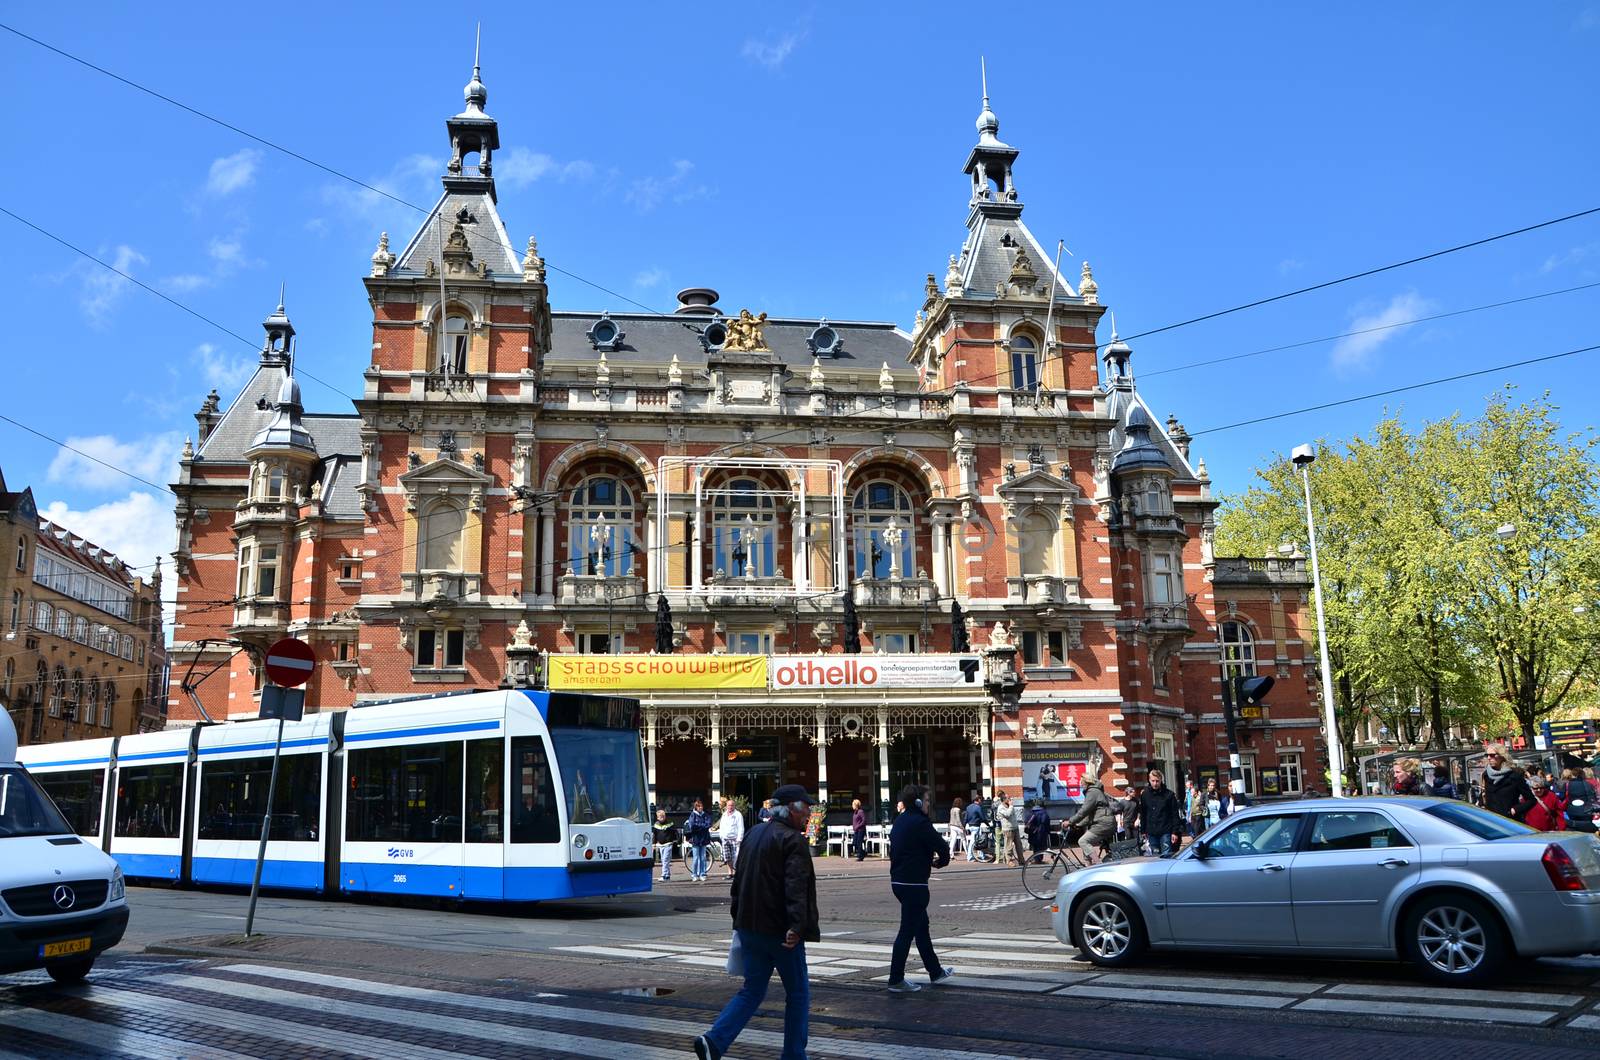 Amsterdam, Netherlands - May 6, 2015: People around Stadsschouwburg building (Municipal theater) at Leidseplein in Amsterdam, Netherlands